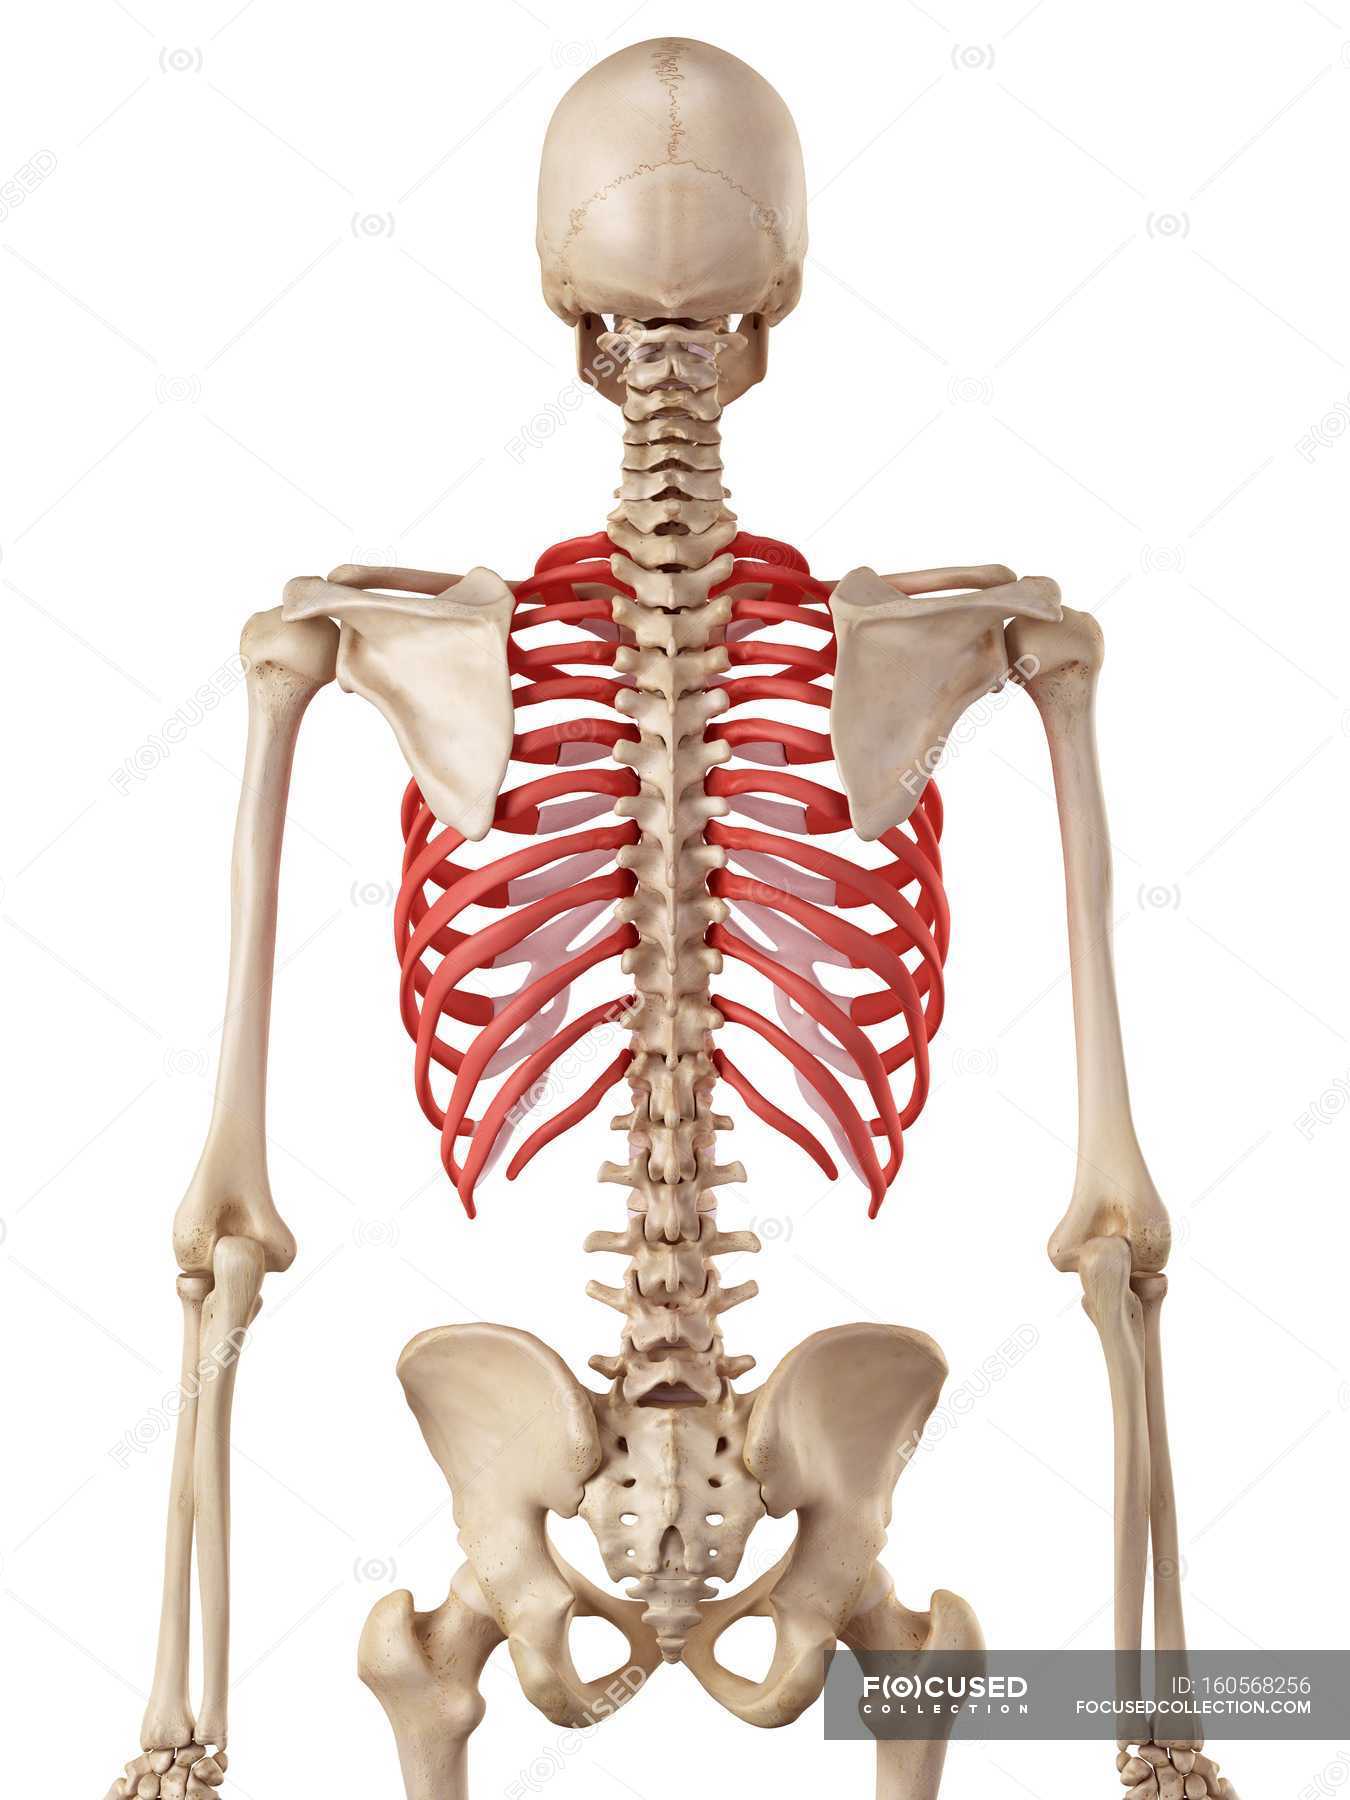 Human Rib Cage Anatomy Human Physiology Osteology Stock Photo 160568256